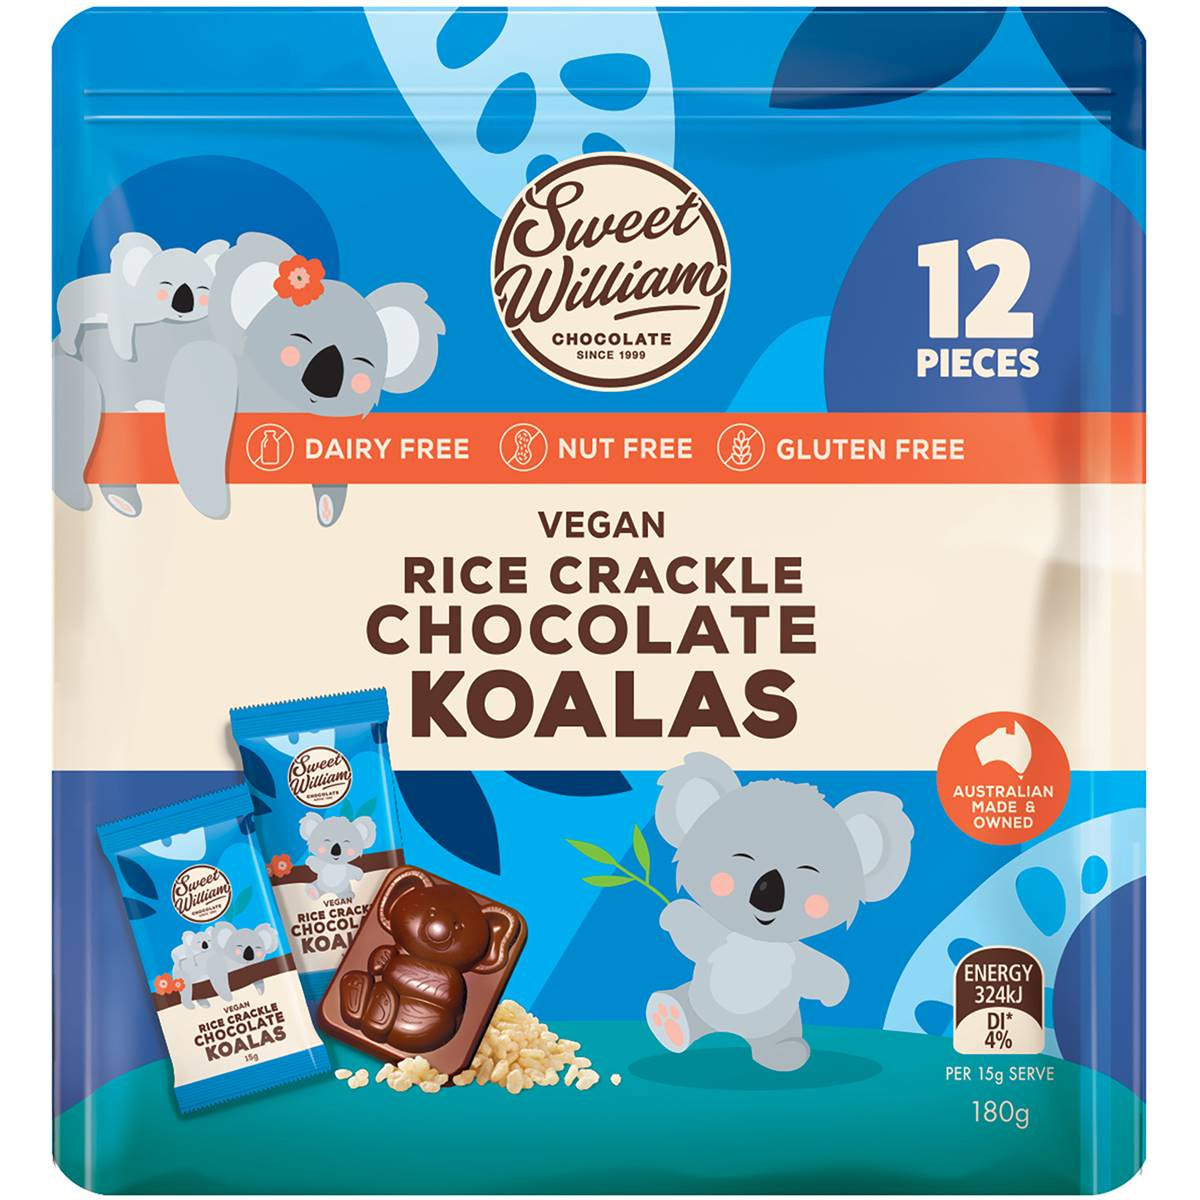 Sweet William Rice Crackle Chocolate Koalas 12 pc 180g